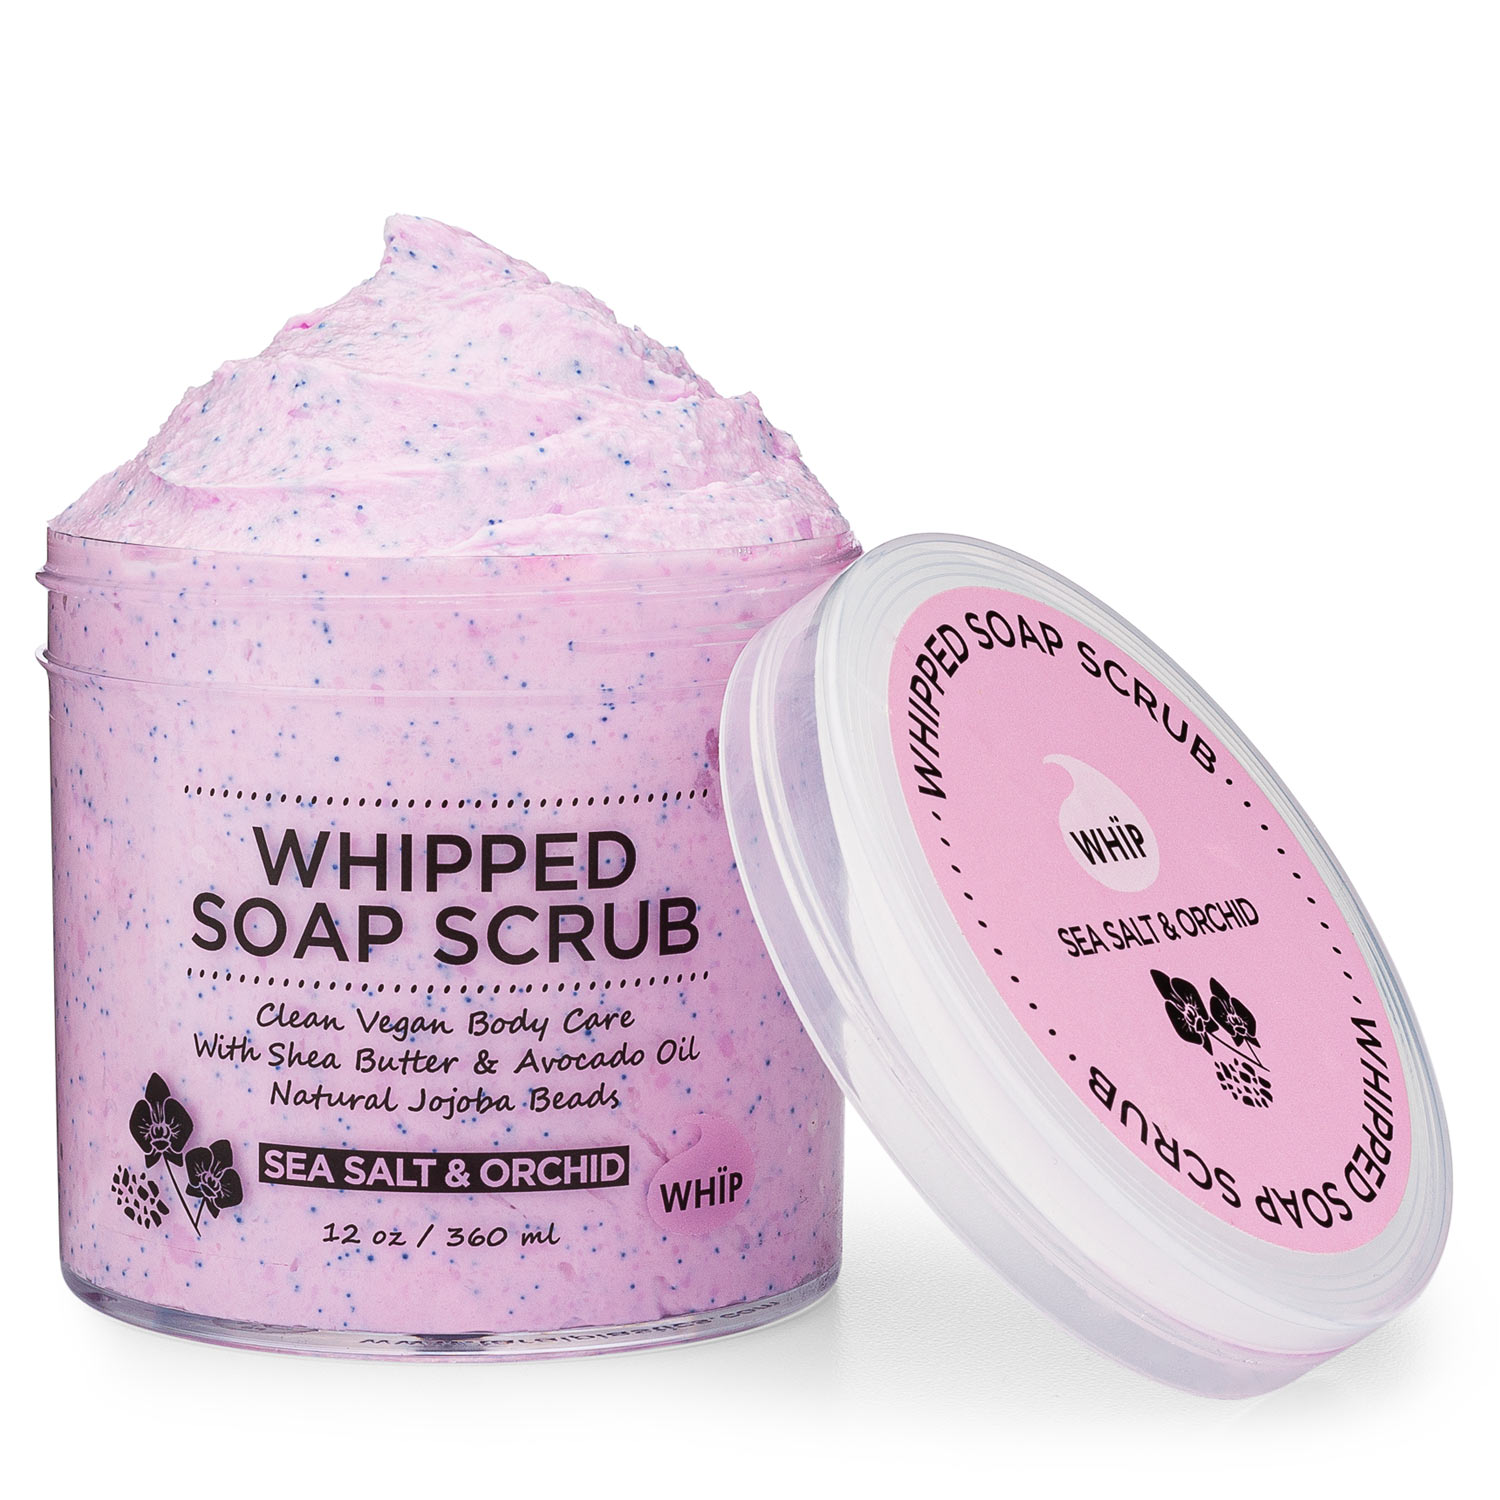 Whipped Soap Scrub - Sea Salt & Orchid WHÏP Image